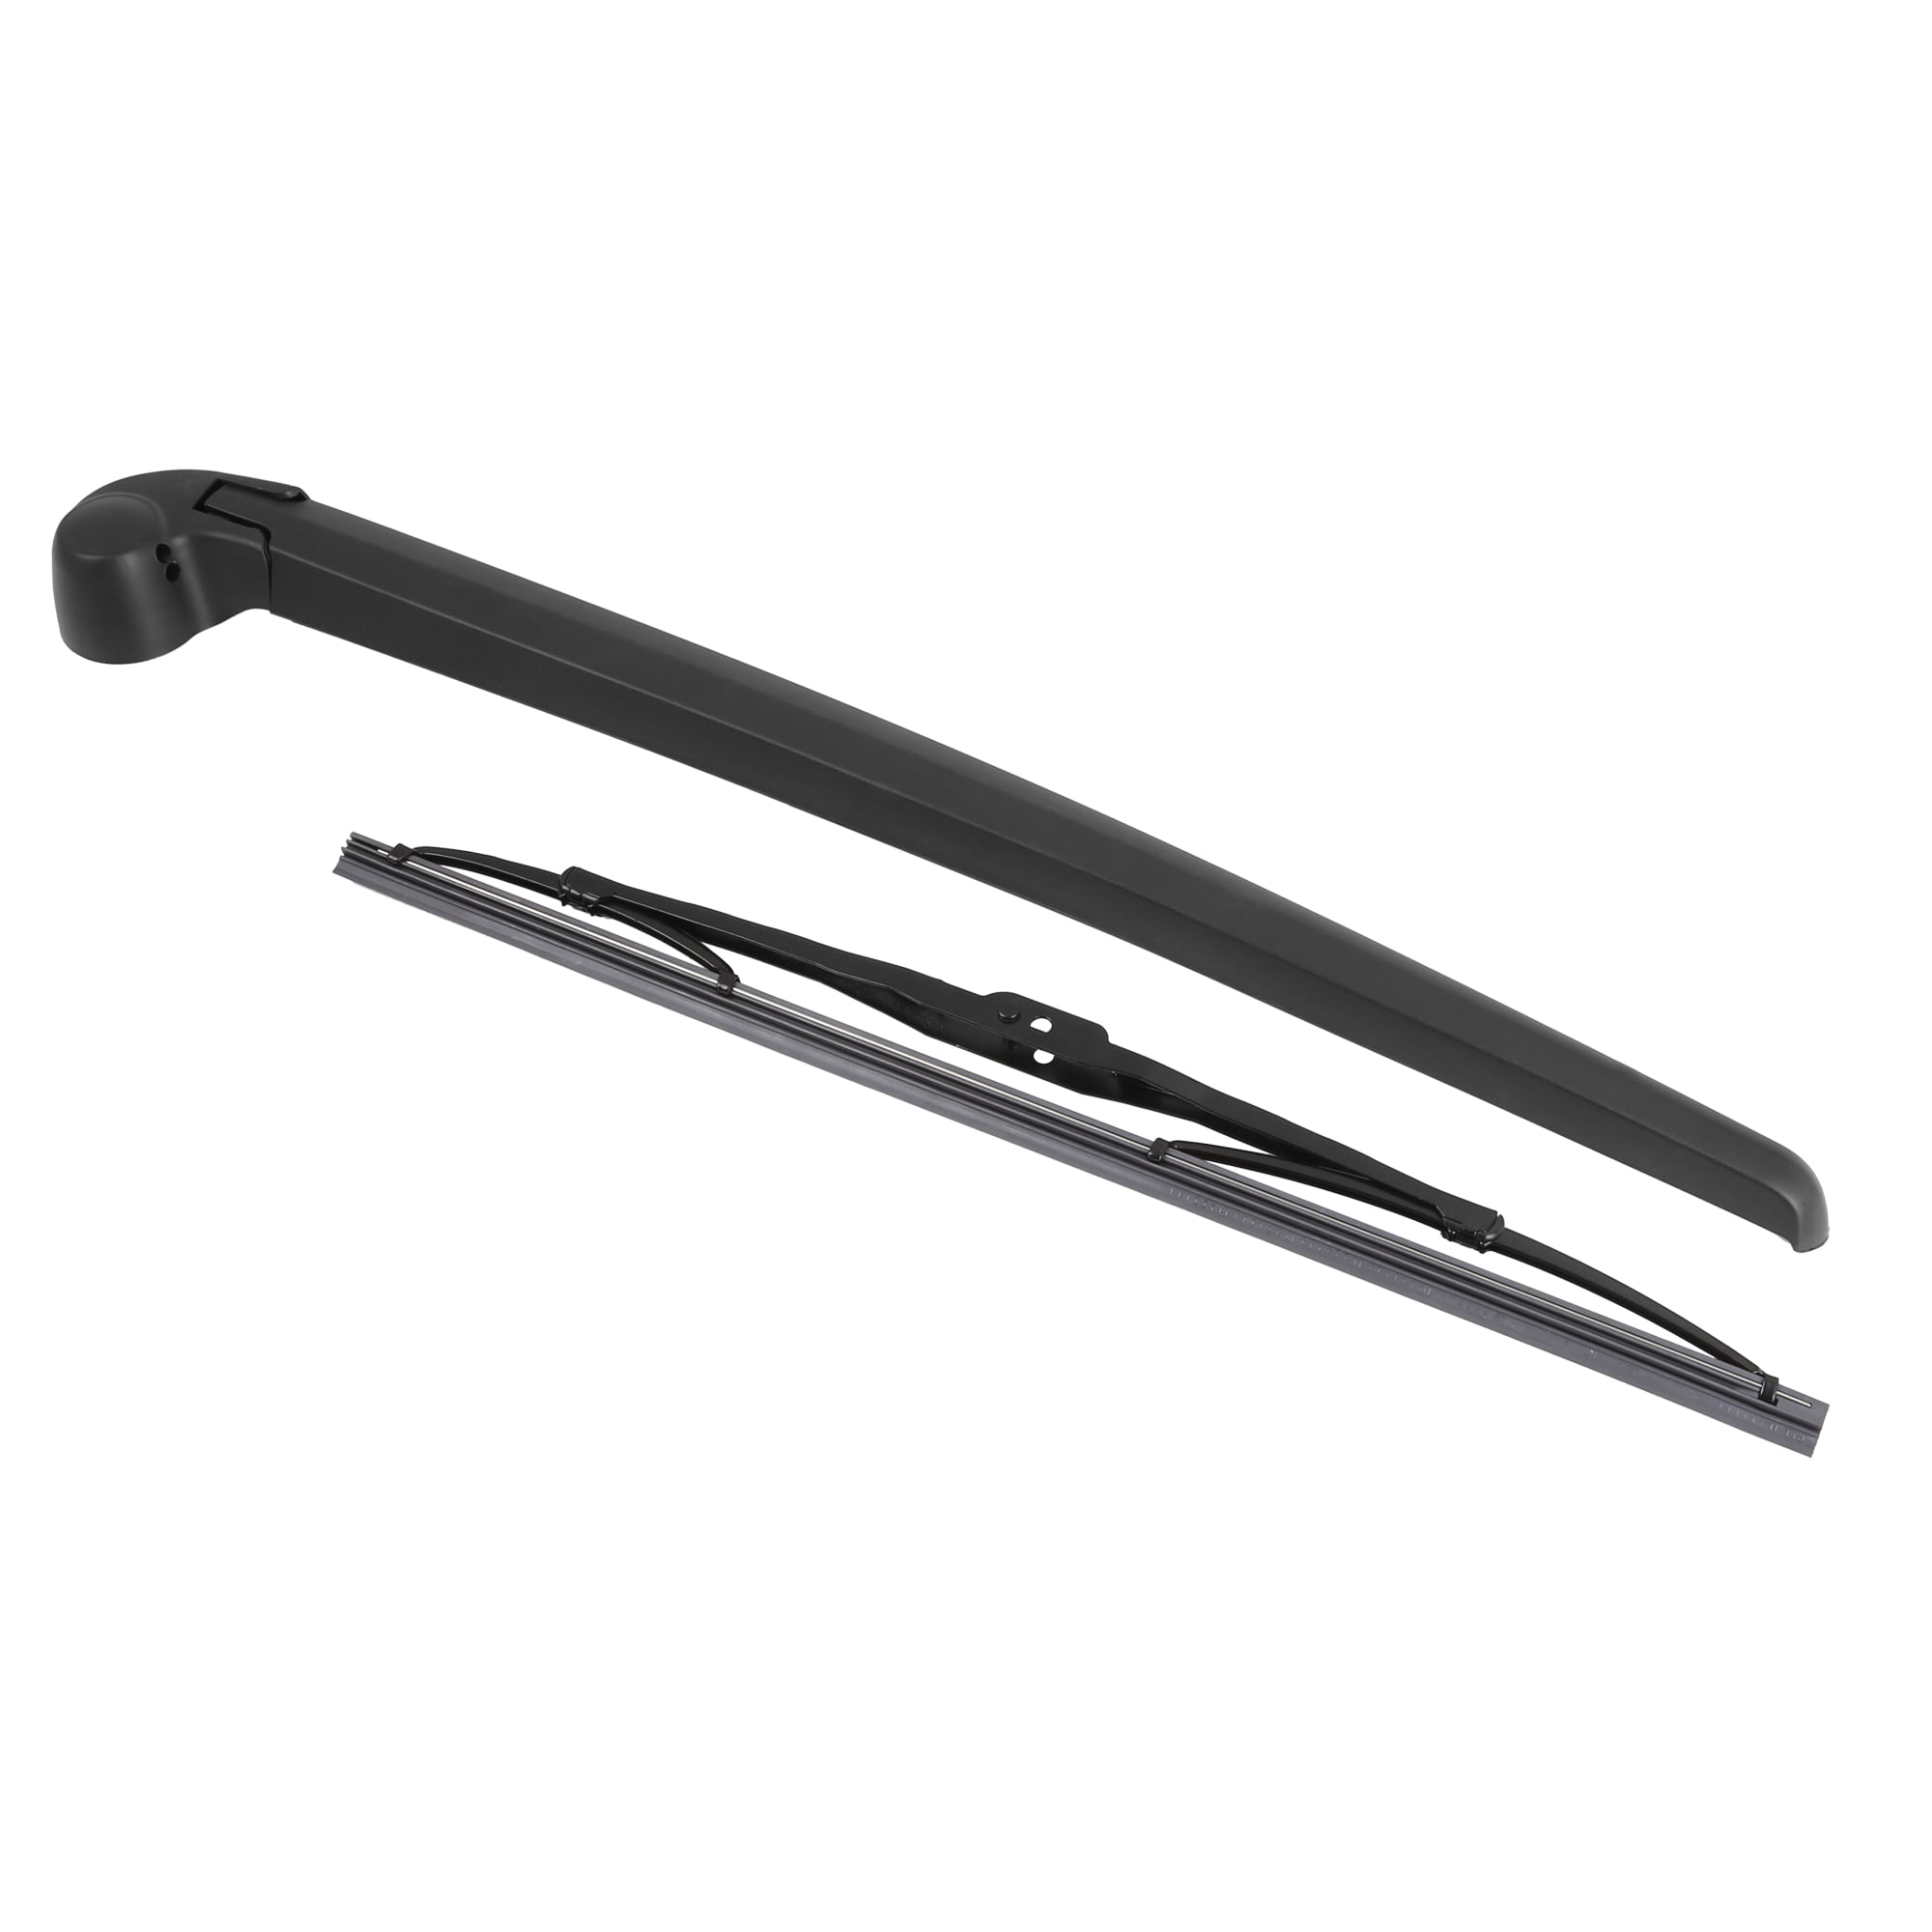 Rear Windshield Wiper Blade Arm Set 355mm 14 Inch for AUDI Q7 2006-2015 | Walmart Canada 2014 Audi Q7 Rear Wiper Blade Size